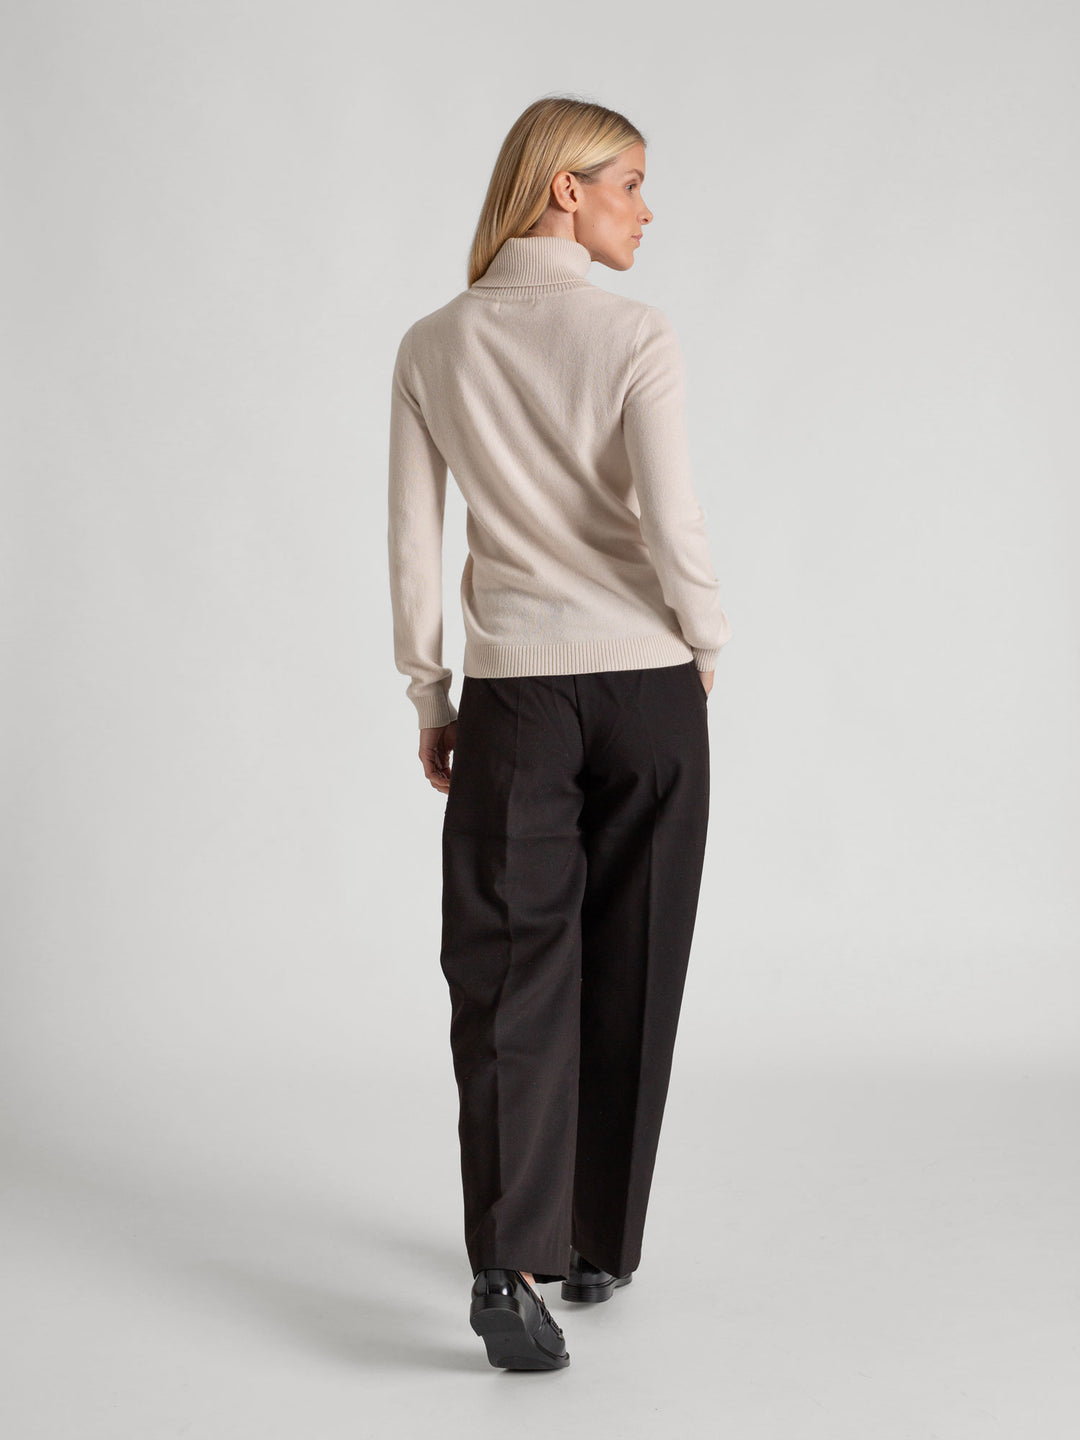 Thin, turtleneck cashmere sweater "Hedda" in 100% pure cashmere. Scandinavian design by Kashmina. Color: Pearl.